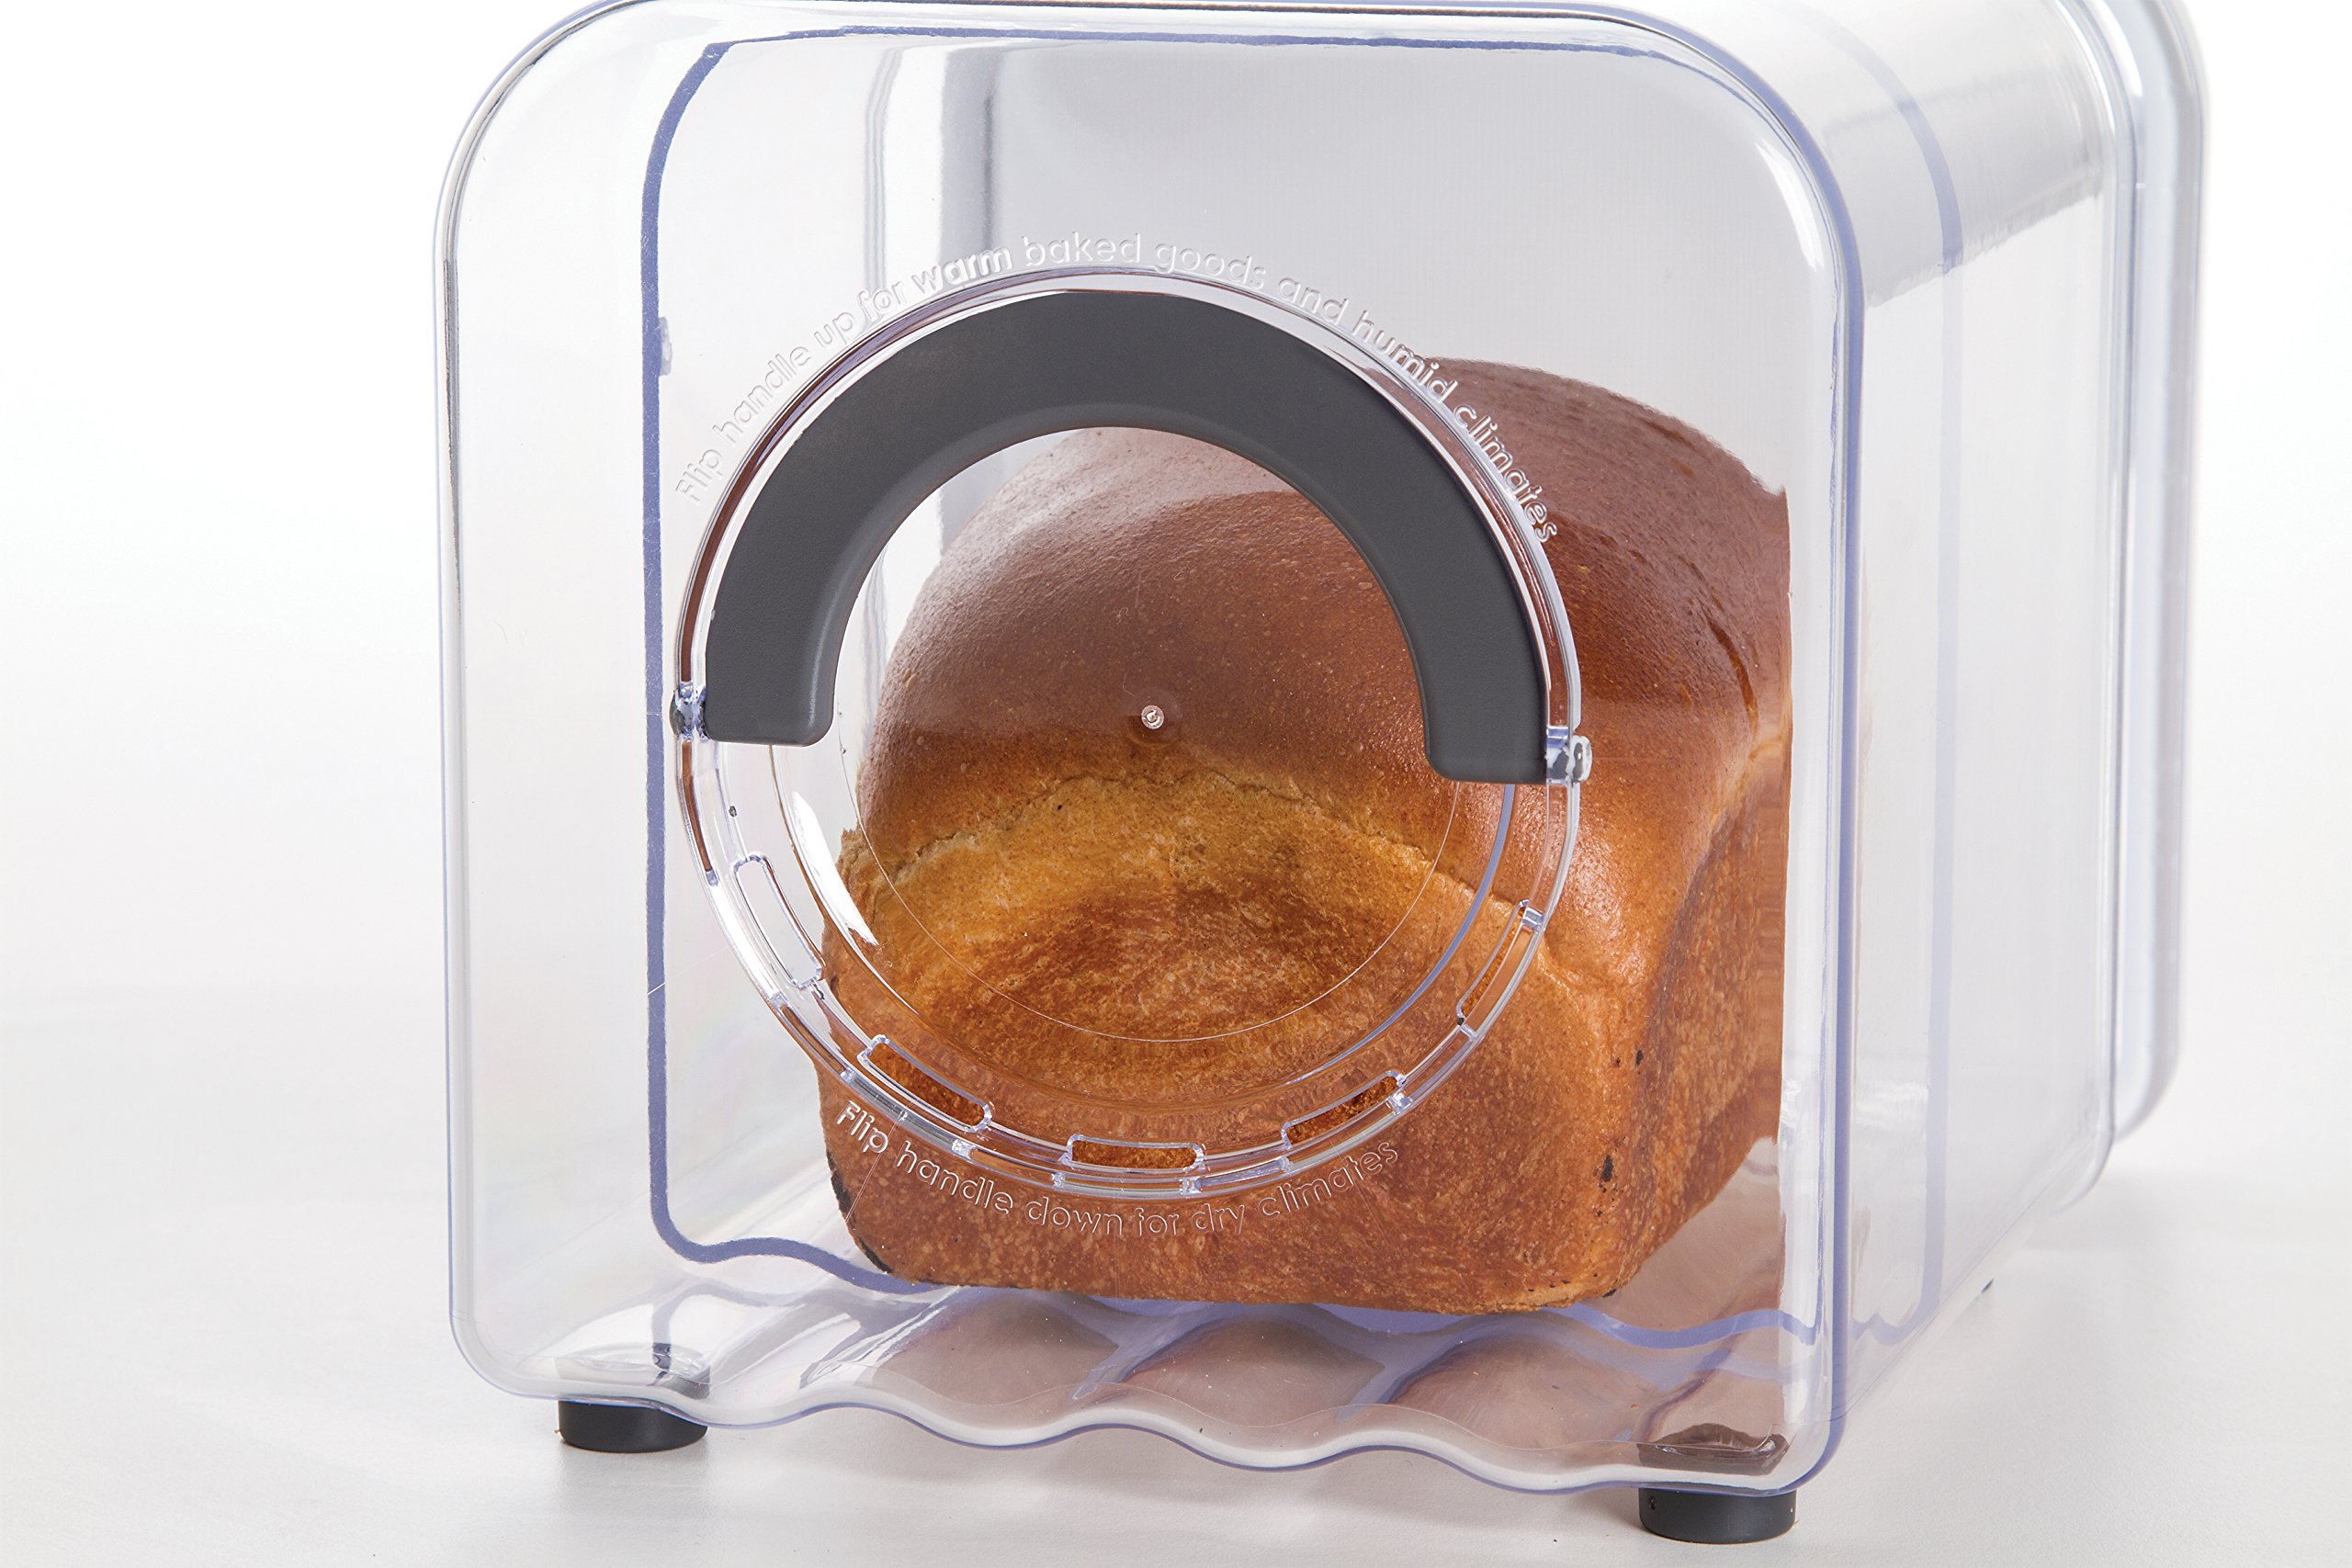 Prepworks by Progressive Bread ProKeeper, PKS-800 Adjustable Air Vented Bread Storage Container, Expandable Bread Holder